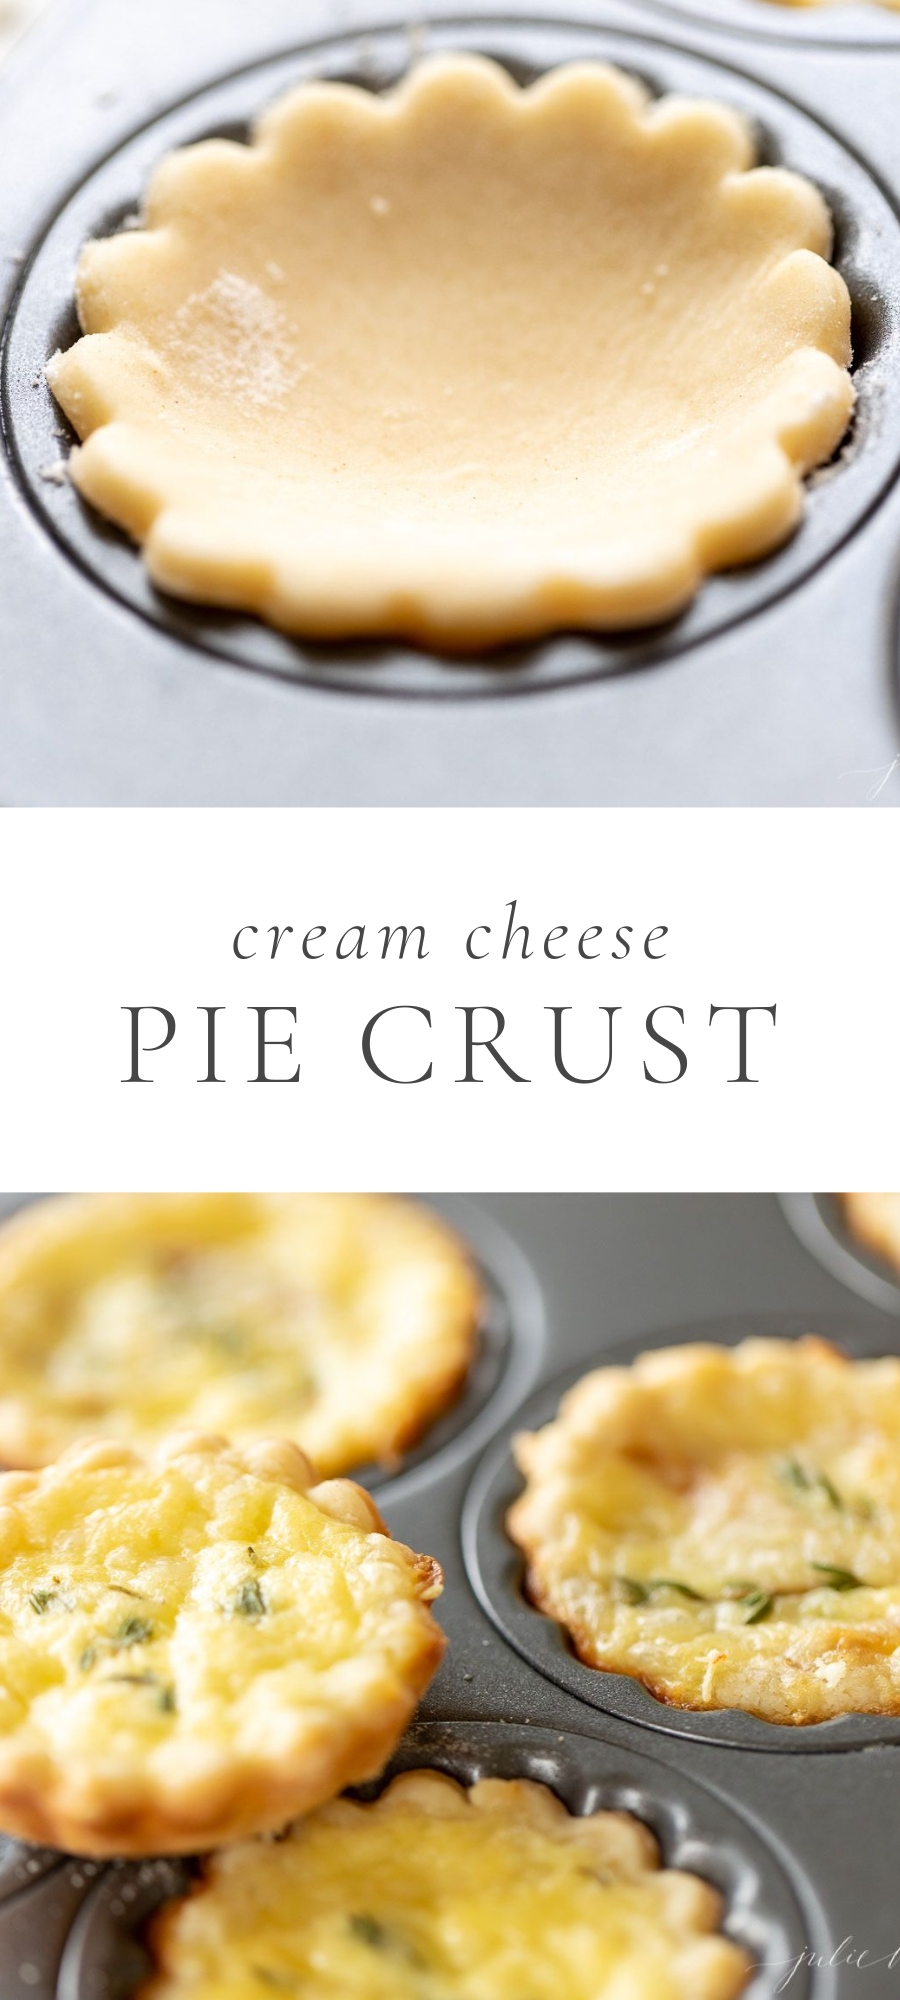 cream cheese pie crust in baking pan with caption "cream cheese pie crust"